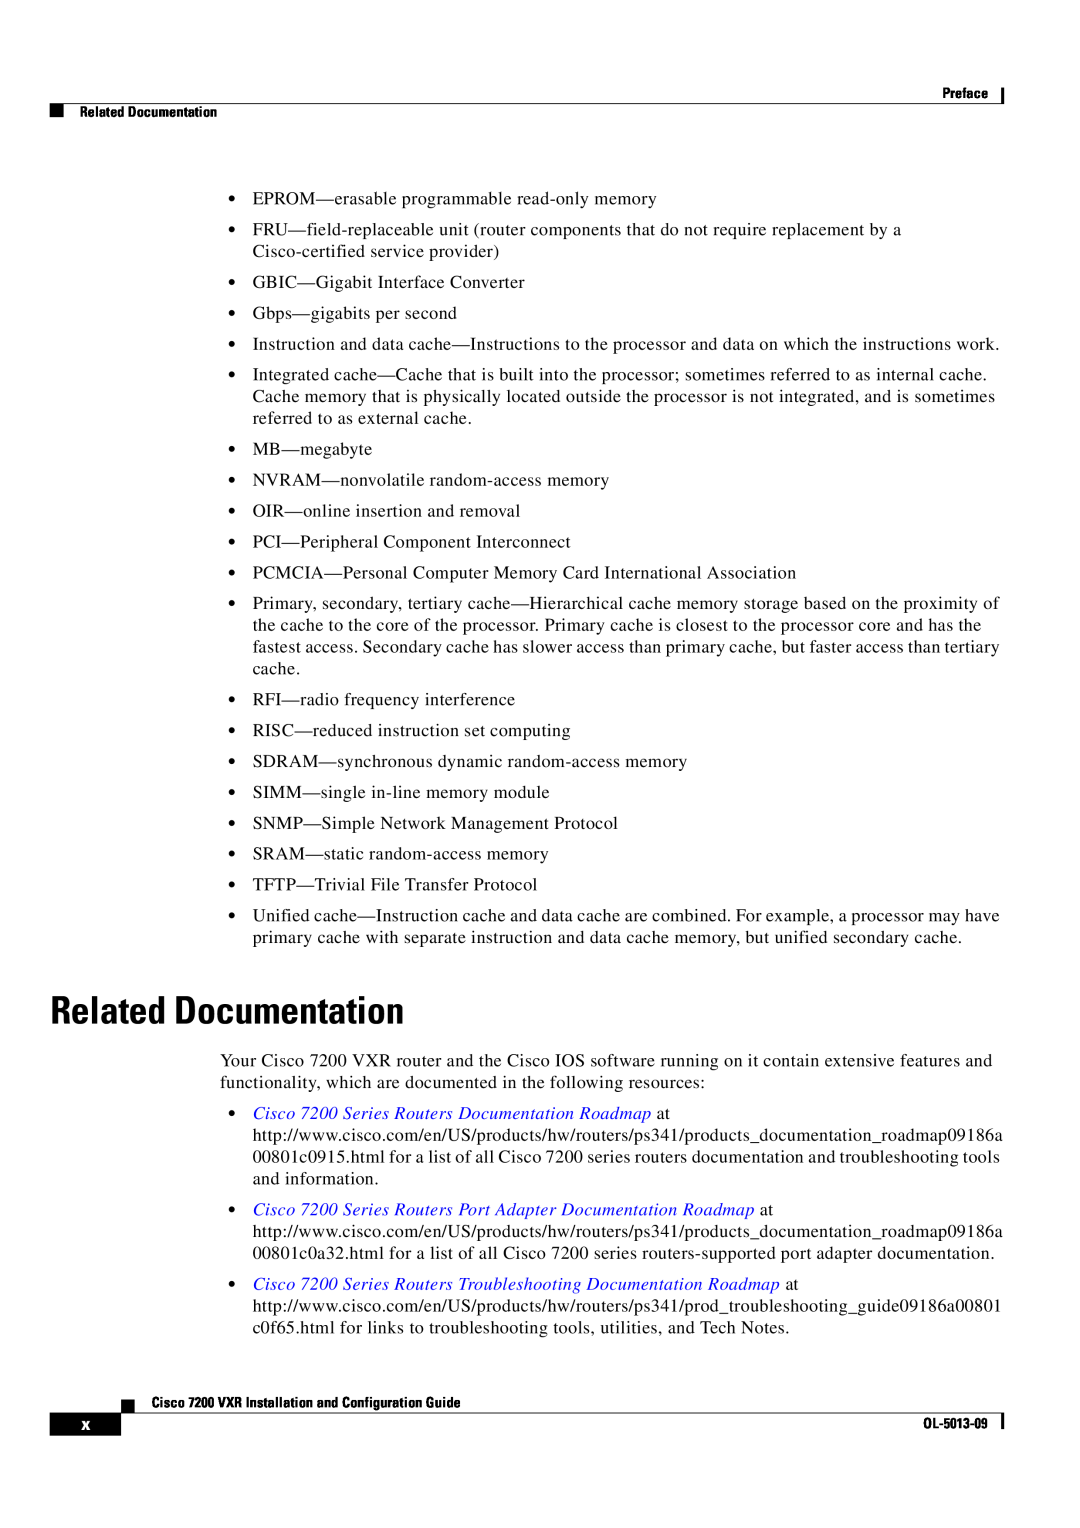 Cisco Systems 7200 VXR manual Related Documentation 